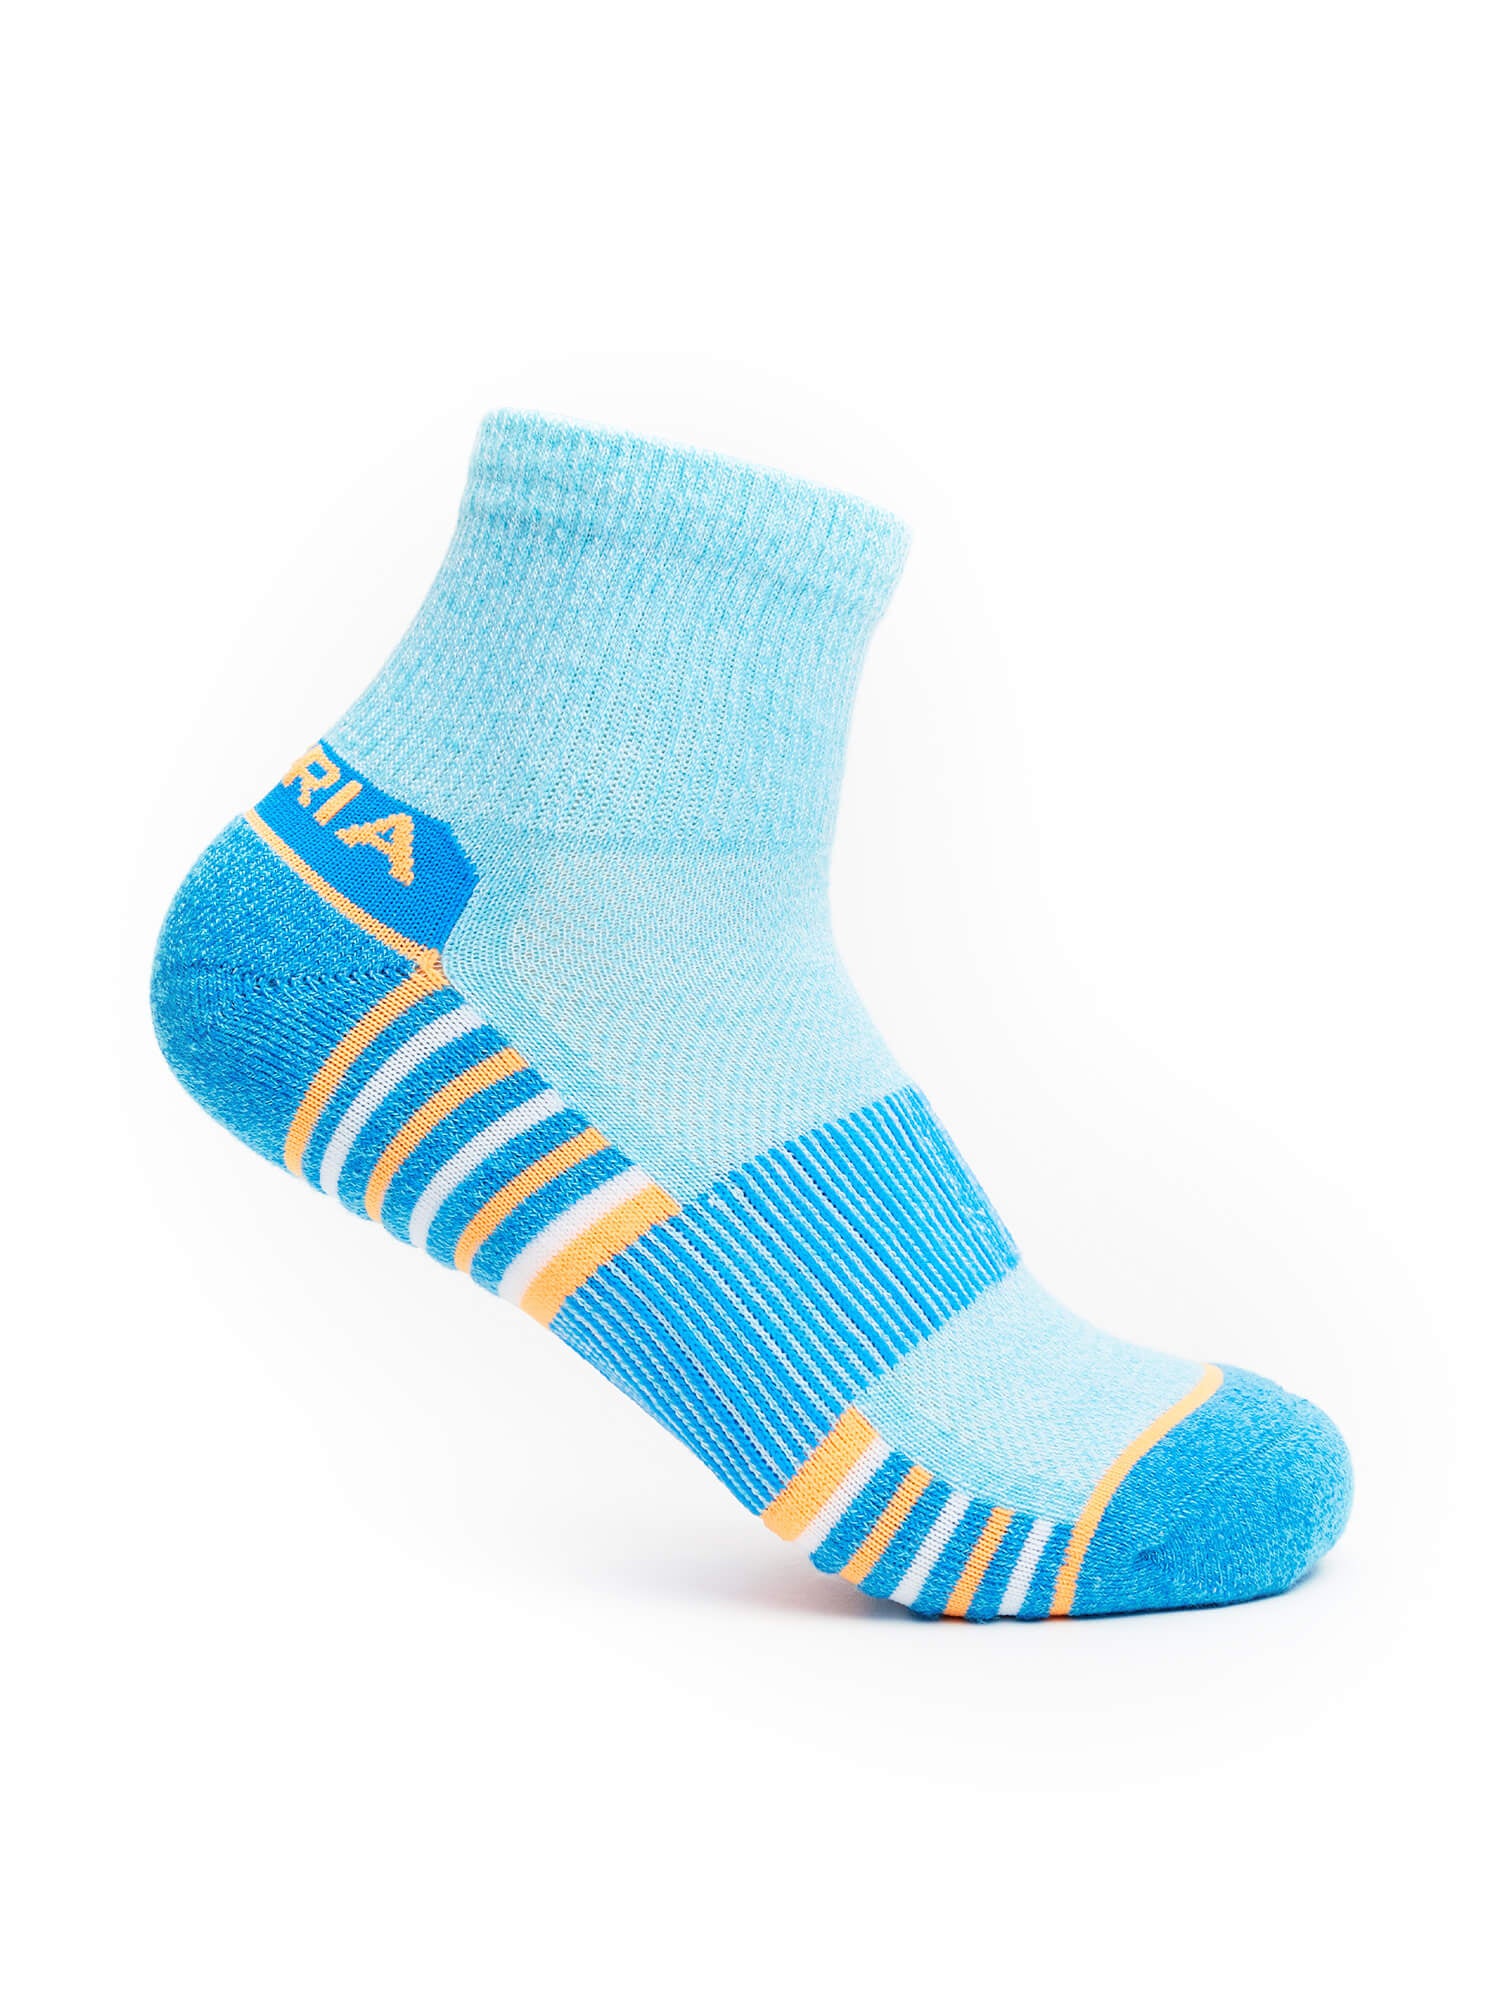 Side of Thorlos Experia Repreve Ankle Socks in Blue